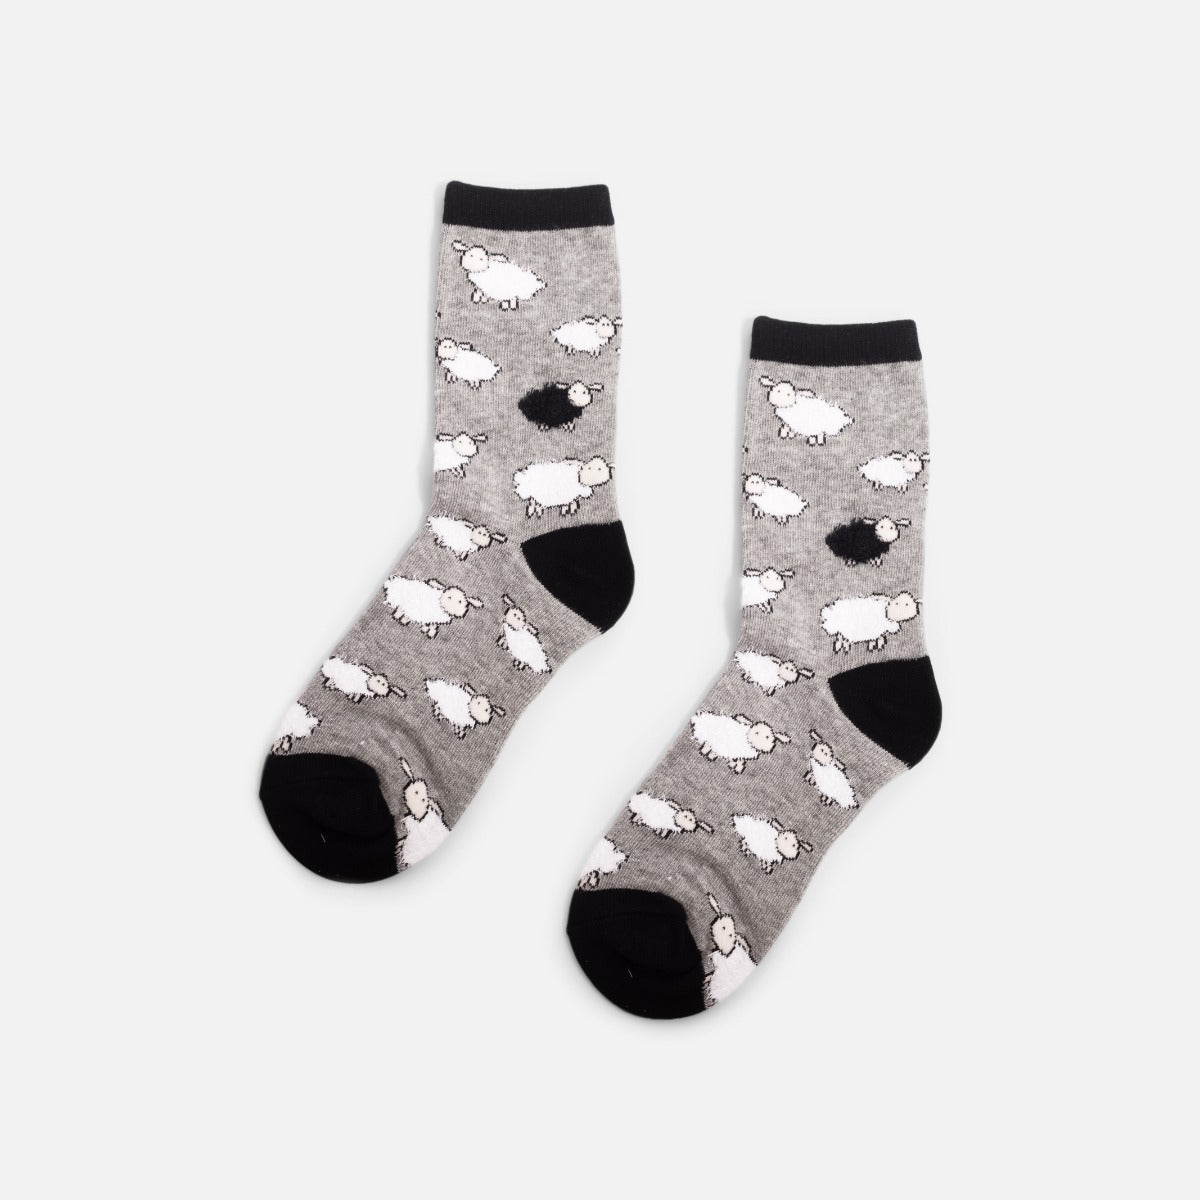 Grey socks with sheep print